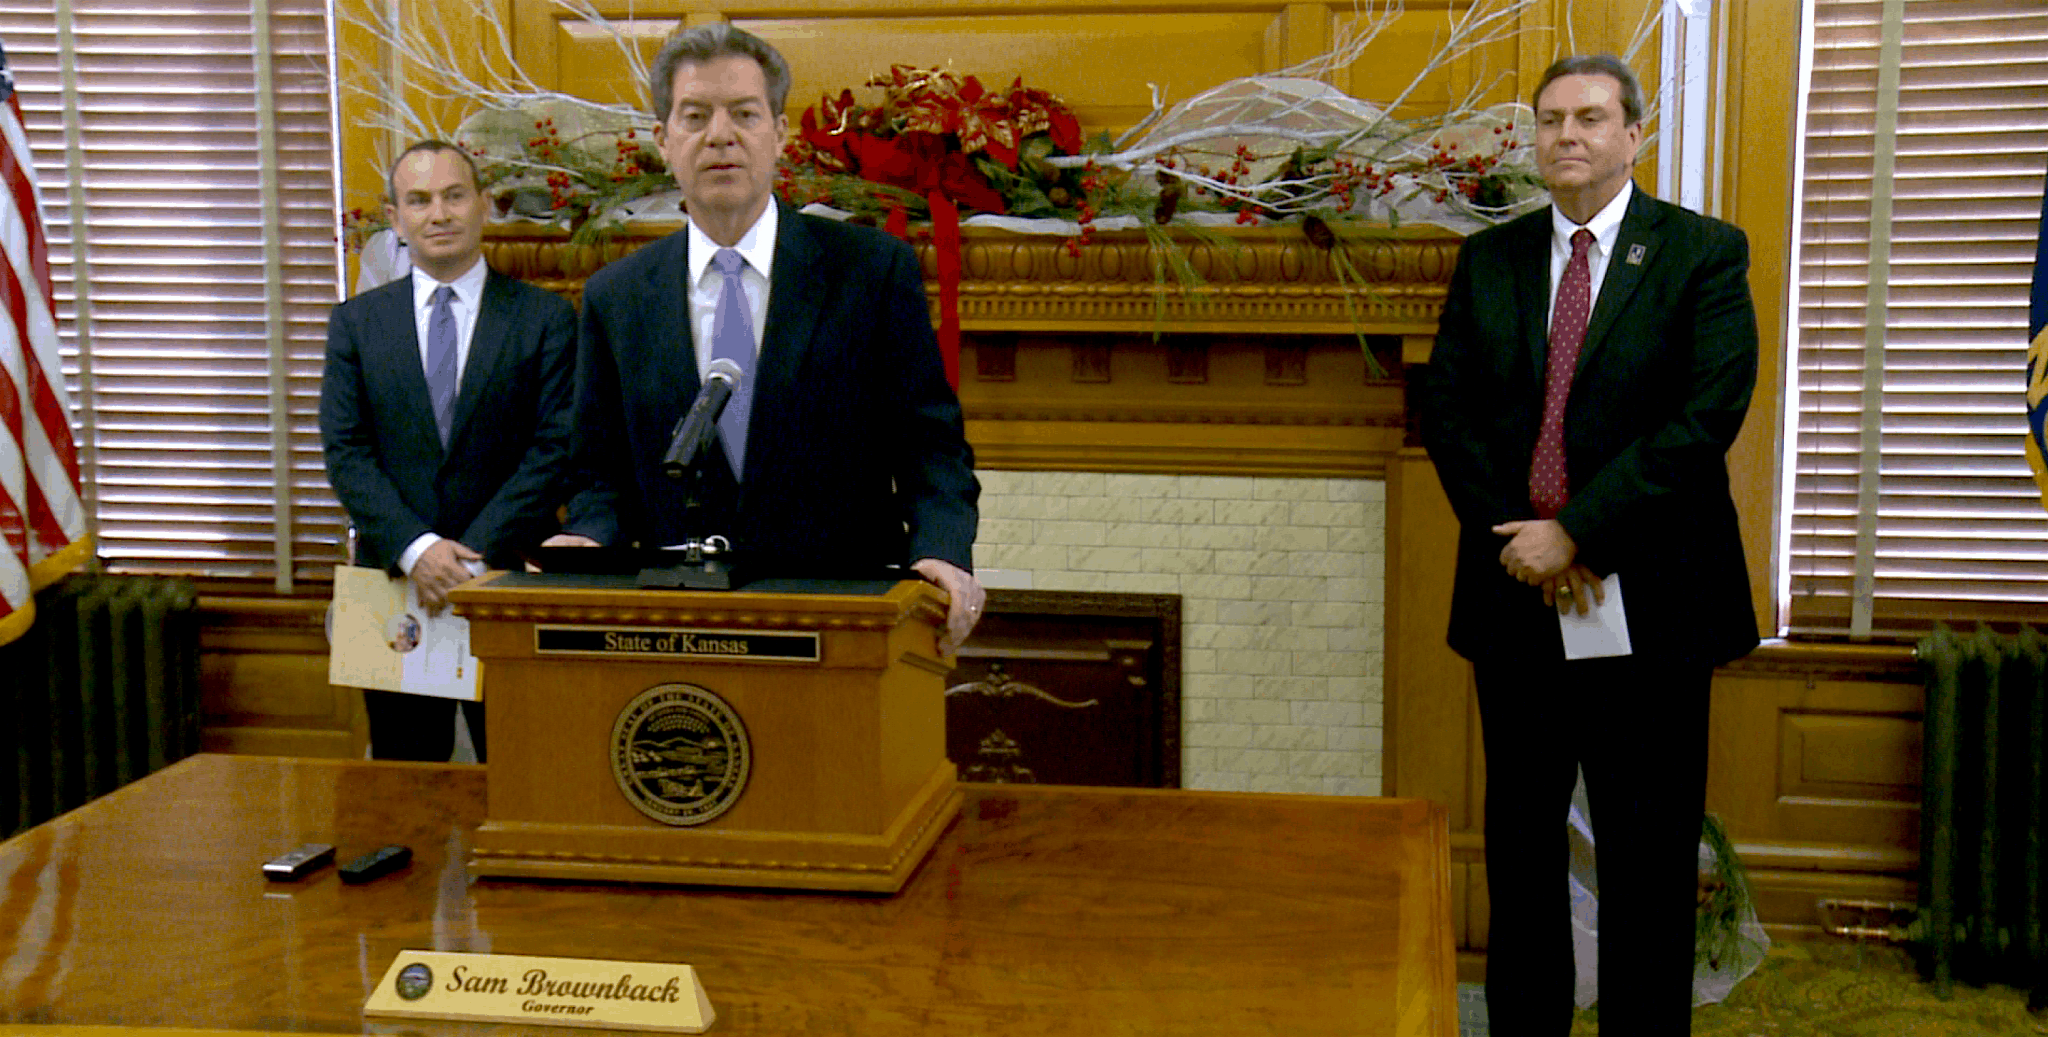 Governor Brownback at a podium